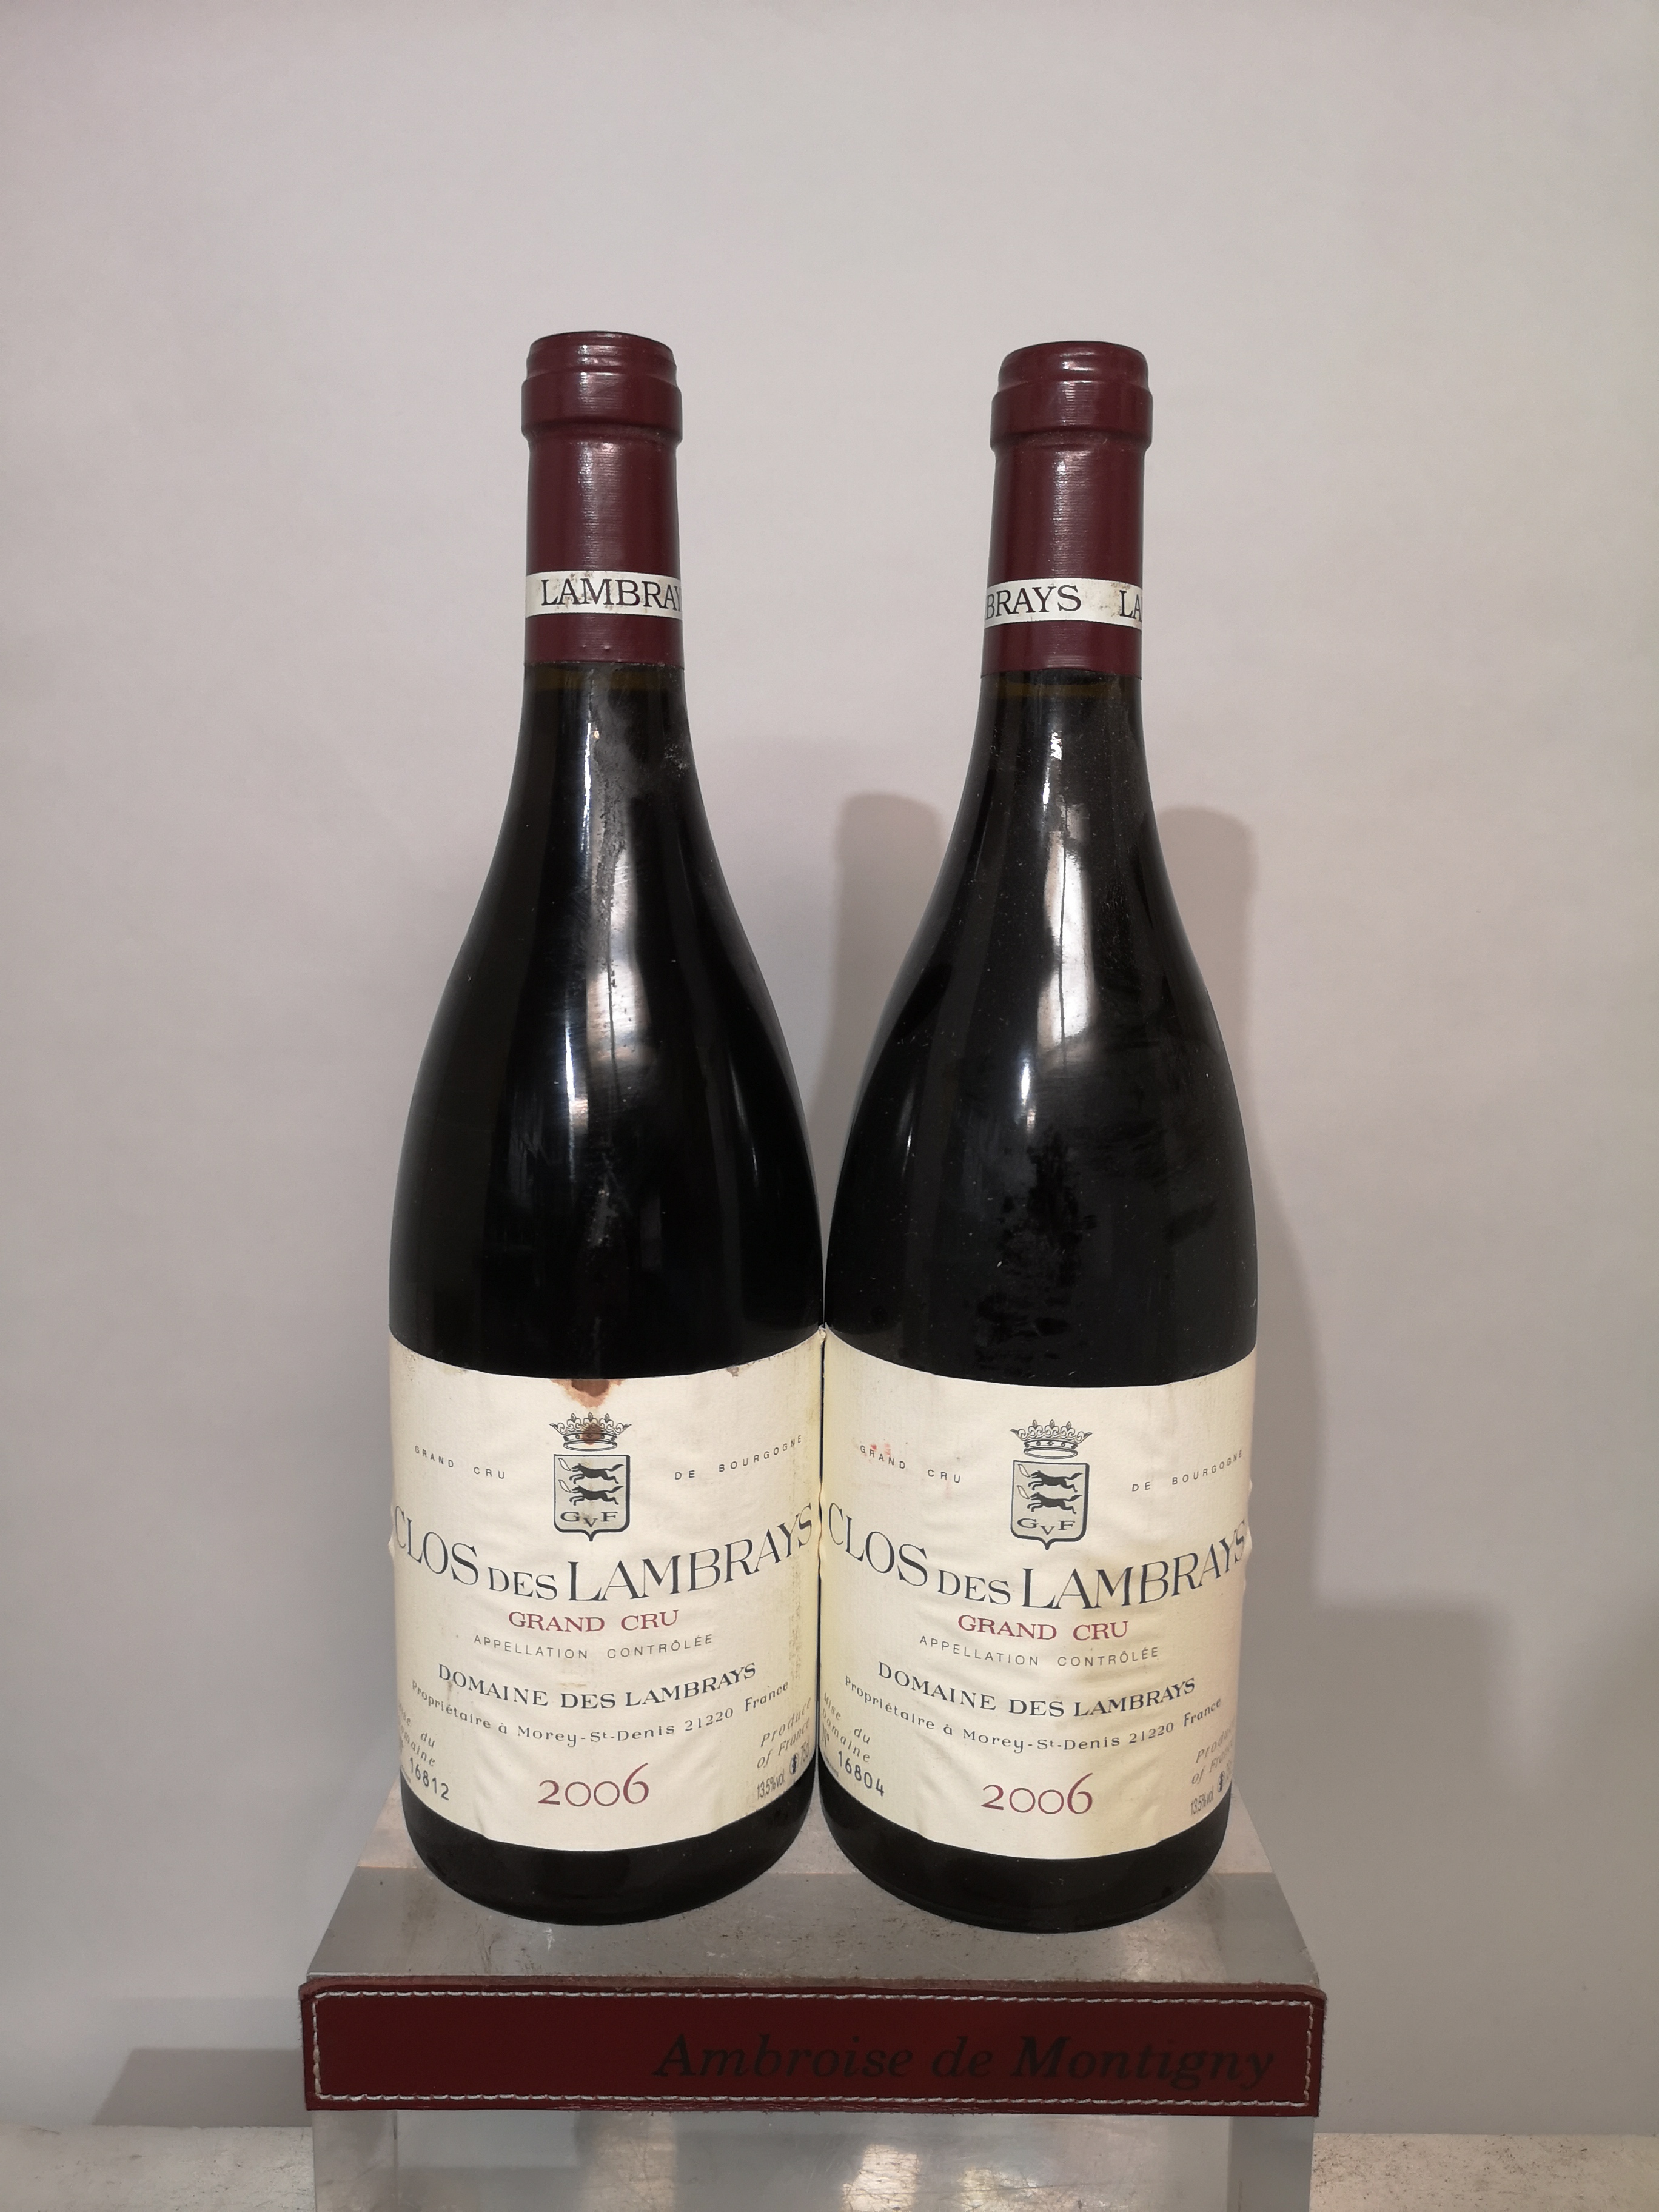 2 bottles CLOS des LAMBRAYS Grand Cru - Domaine des LAMBRAYS 2006.
 Labels slightly stained.